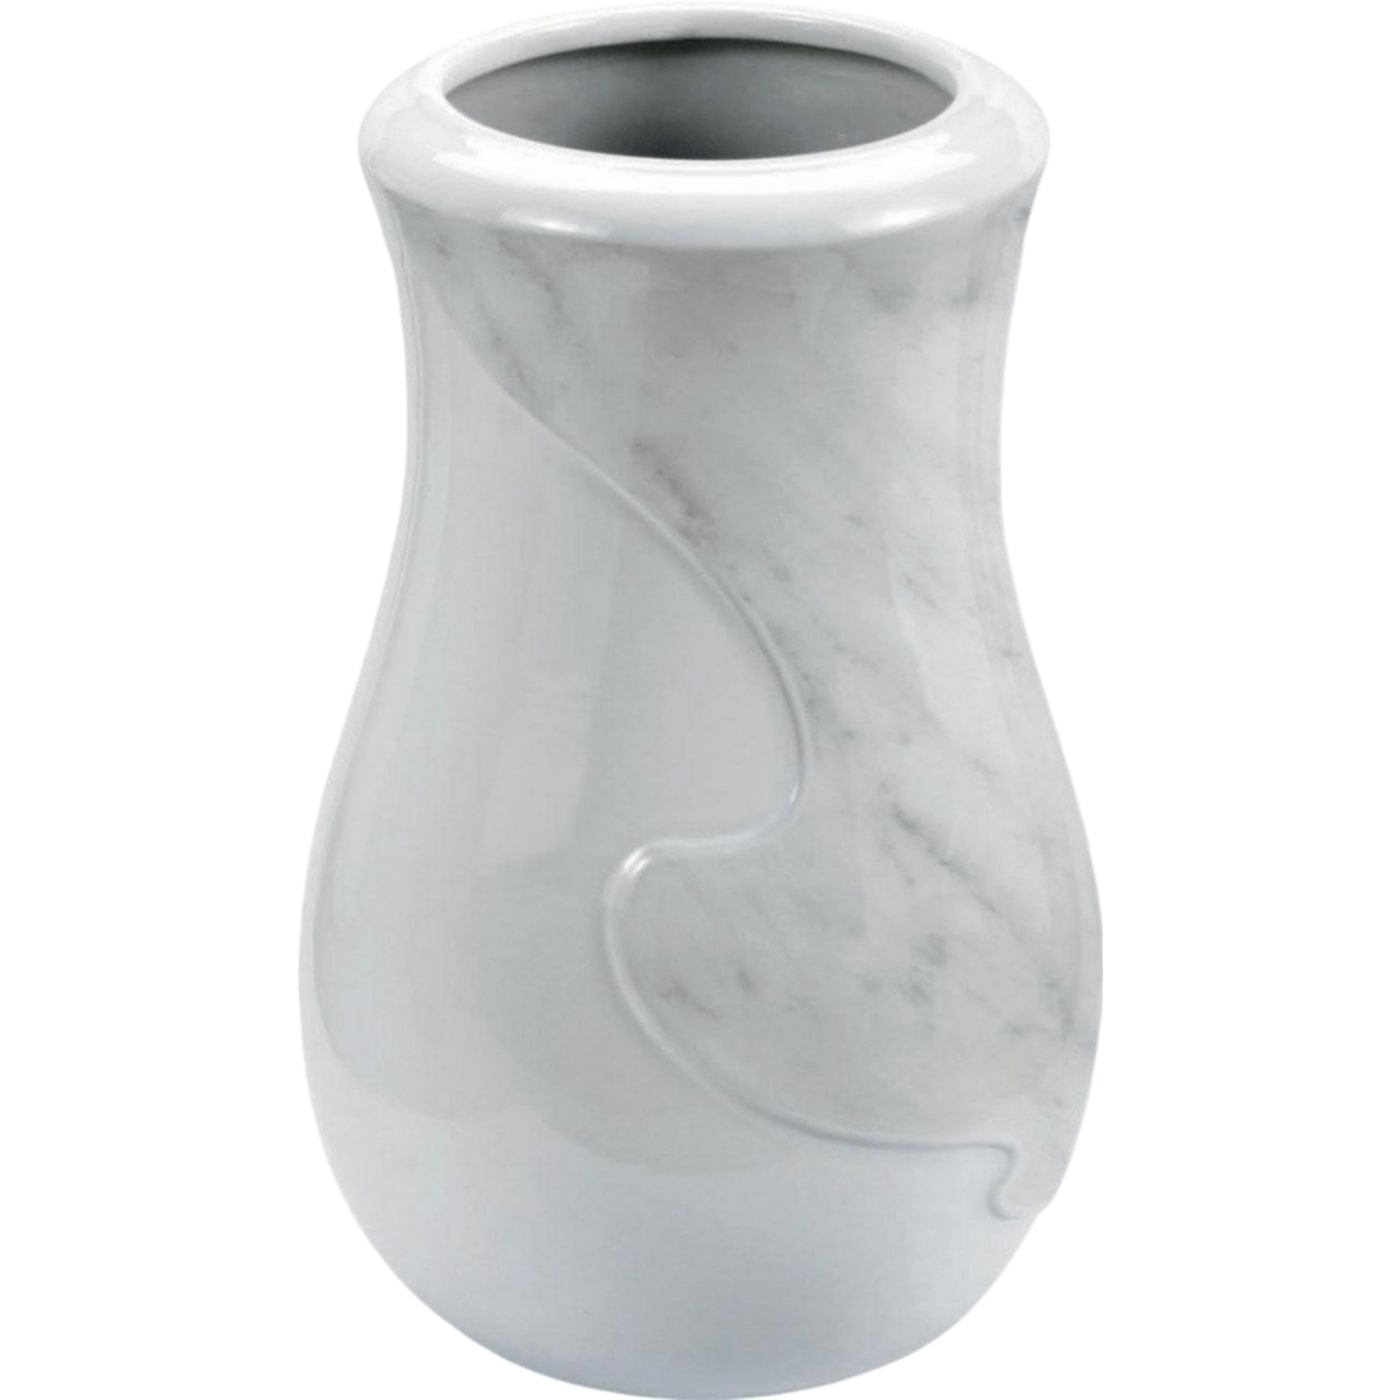 Grave vase Anna carrara 21x13cm - 8.3x5.1in In white porcelain with carrara decoration, wall attached ANN134P/CARR